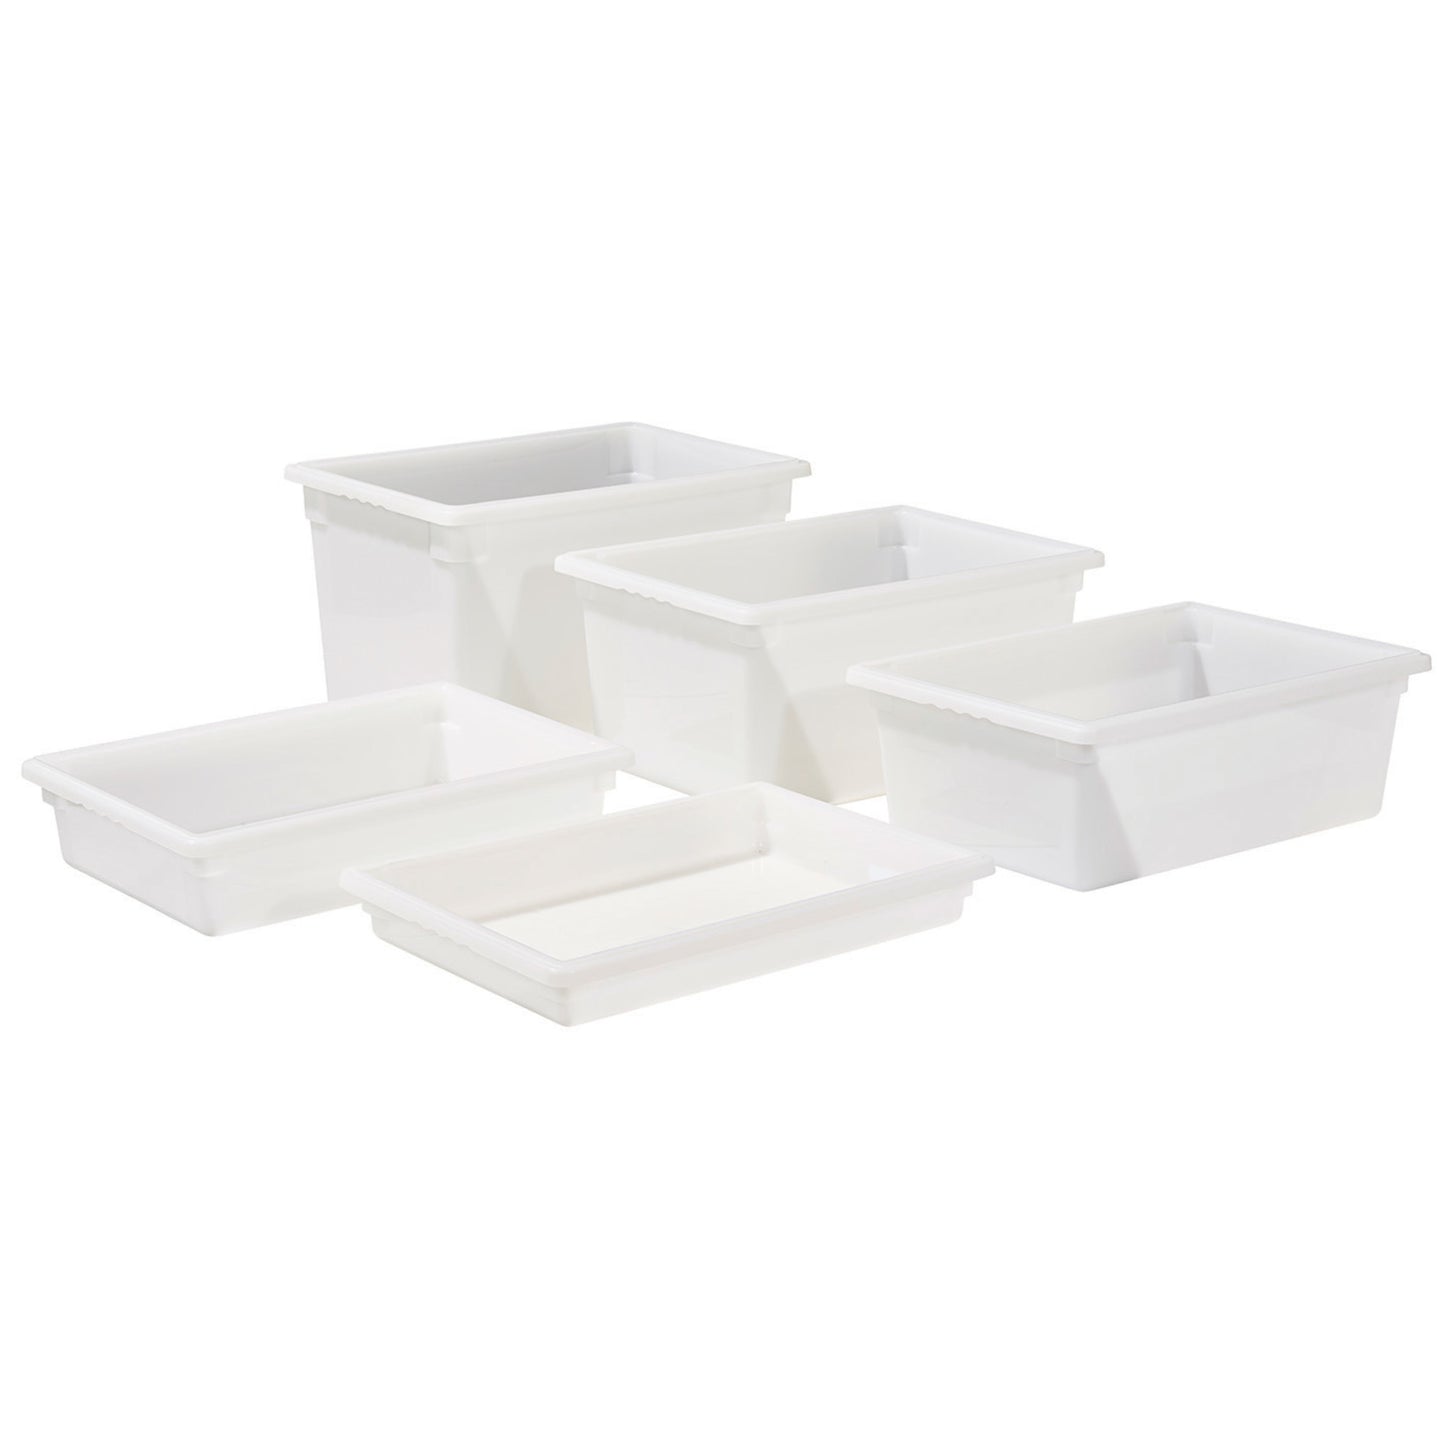 PFFW-12 - Food Storage Box, White Polypropylene - Full, 12"